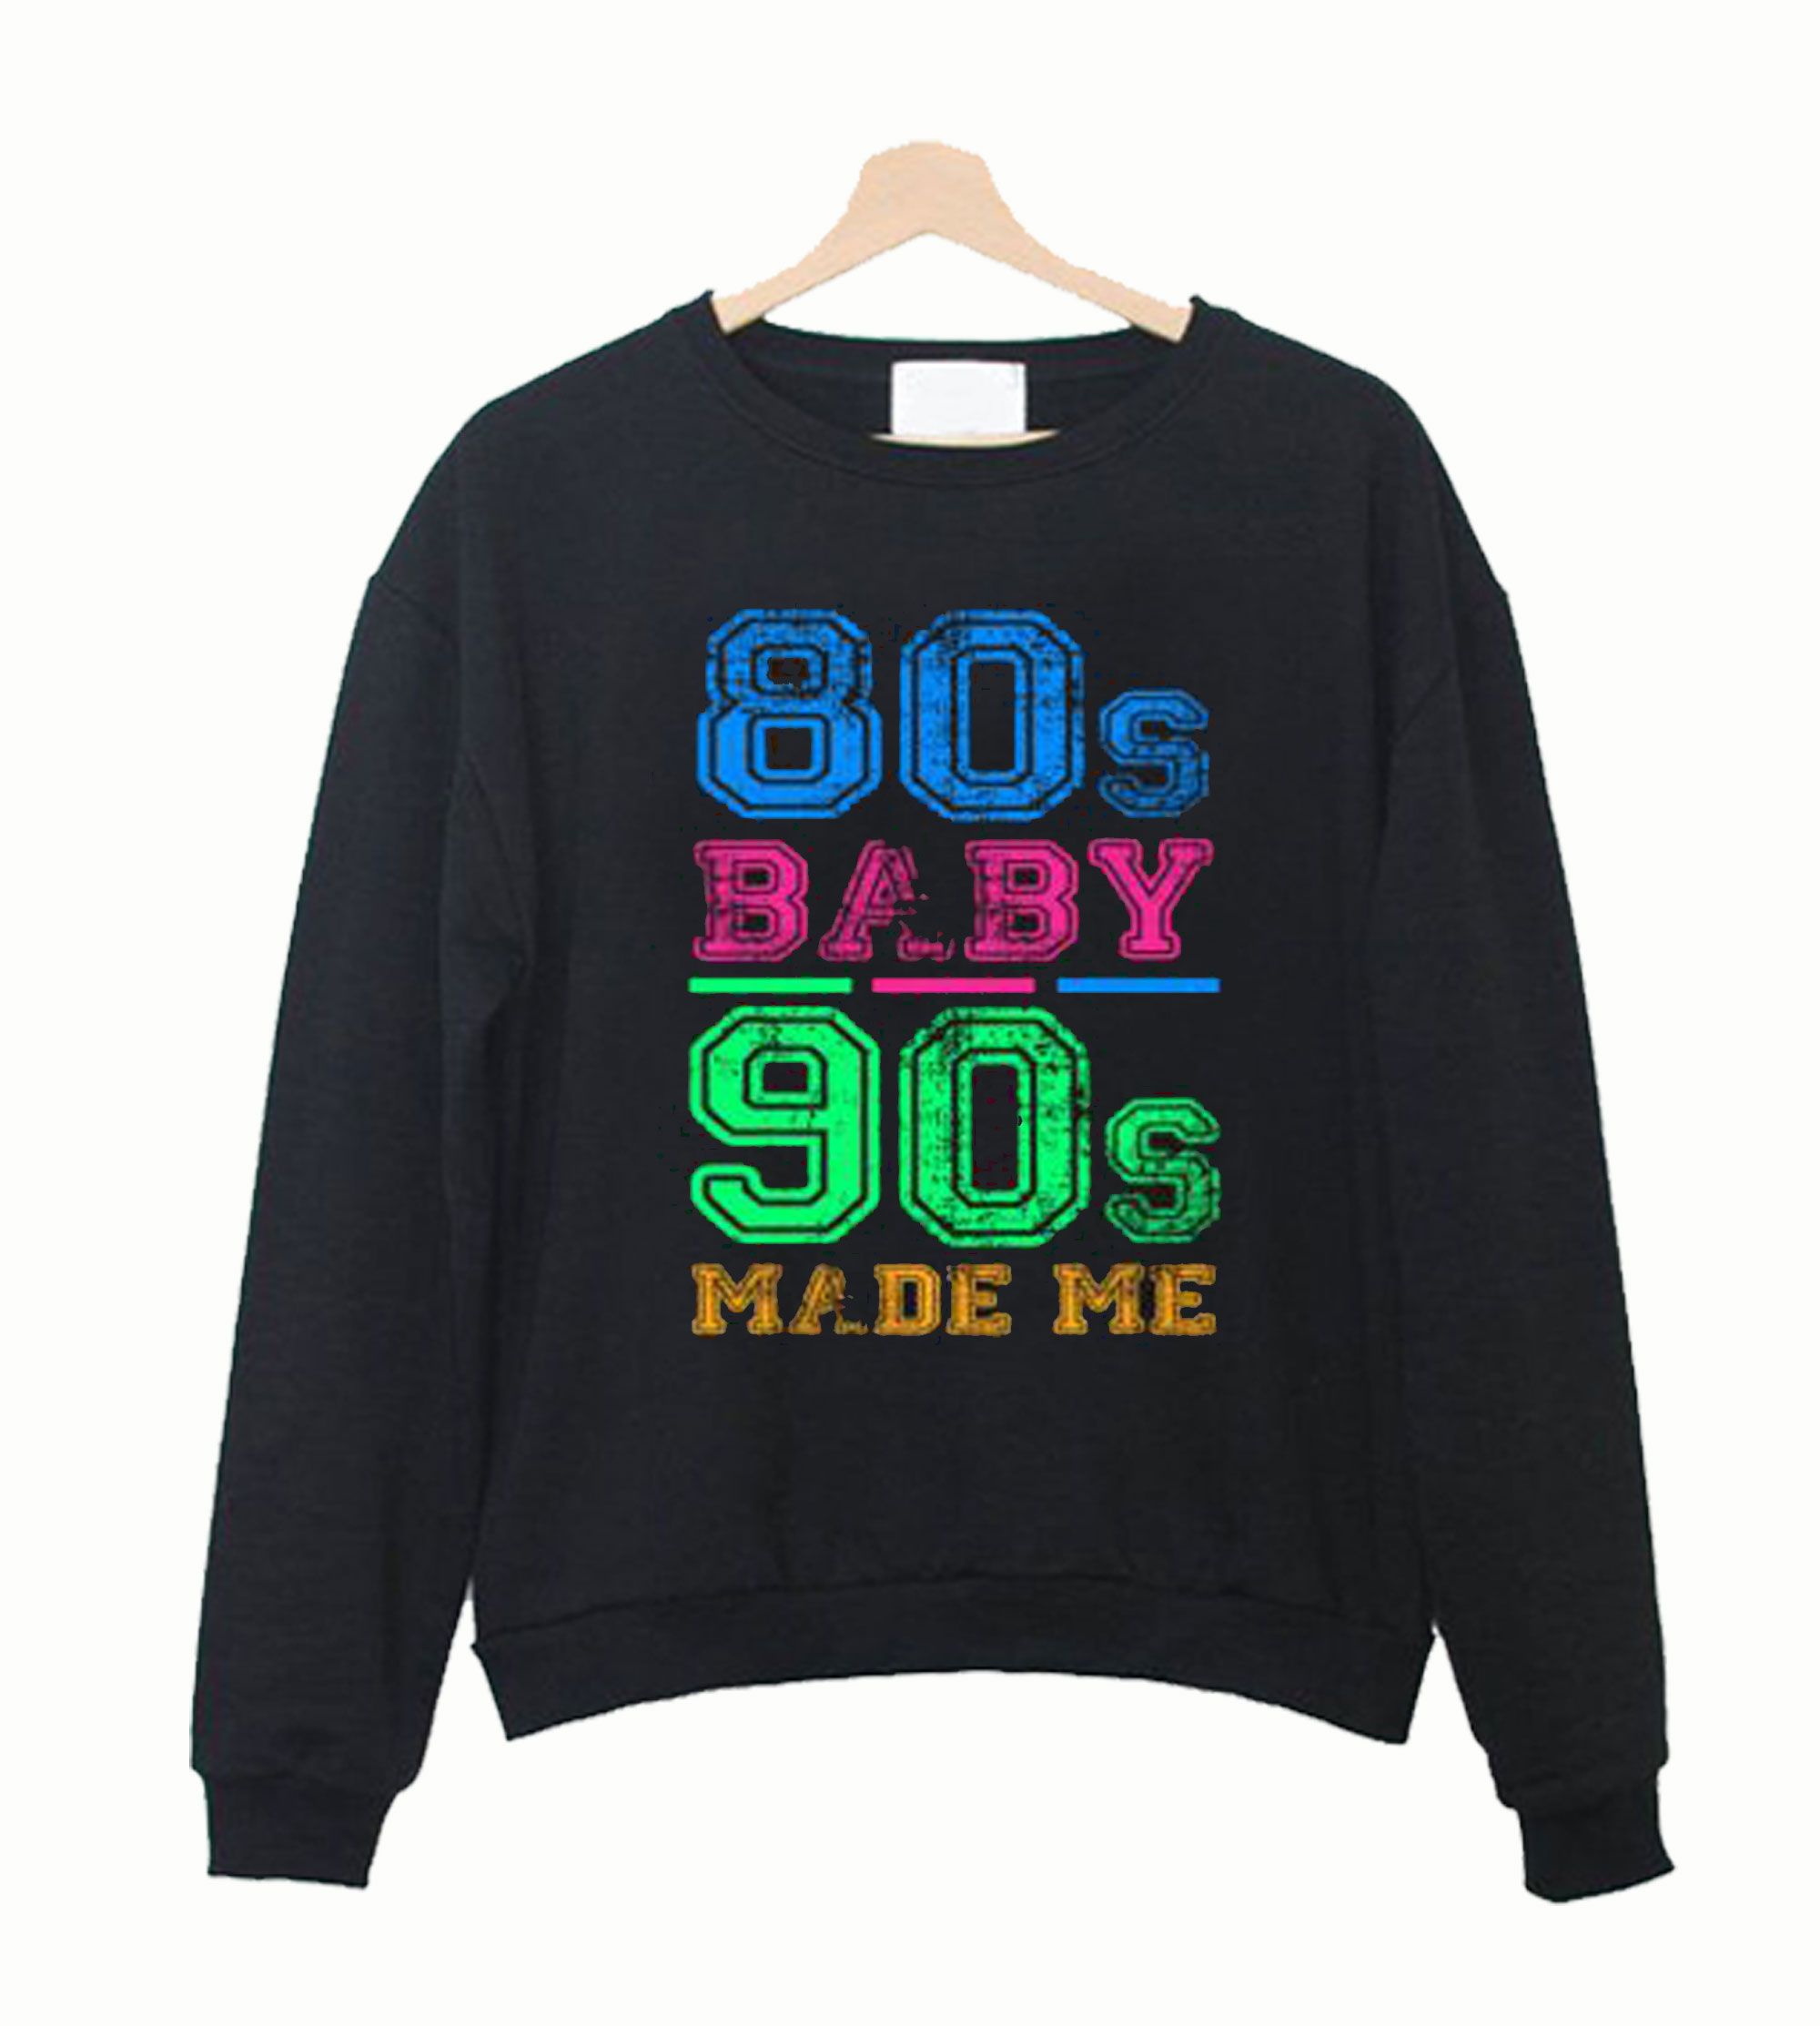 Download 80s Baby 90s Made Me Vintage Retro Sweatshirt